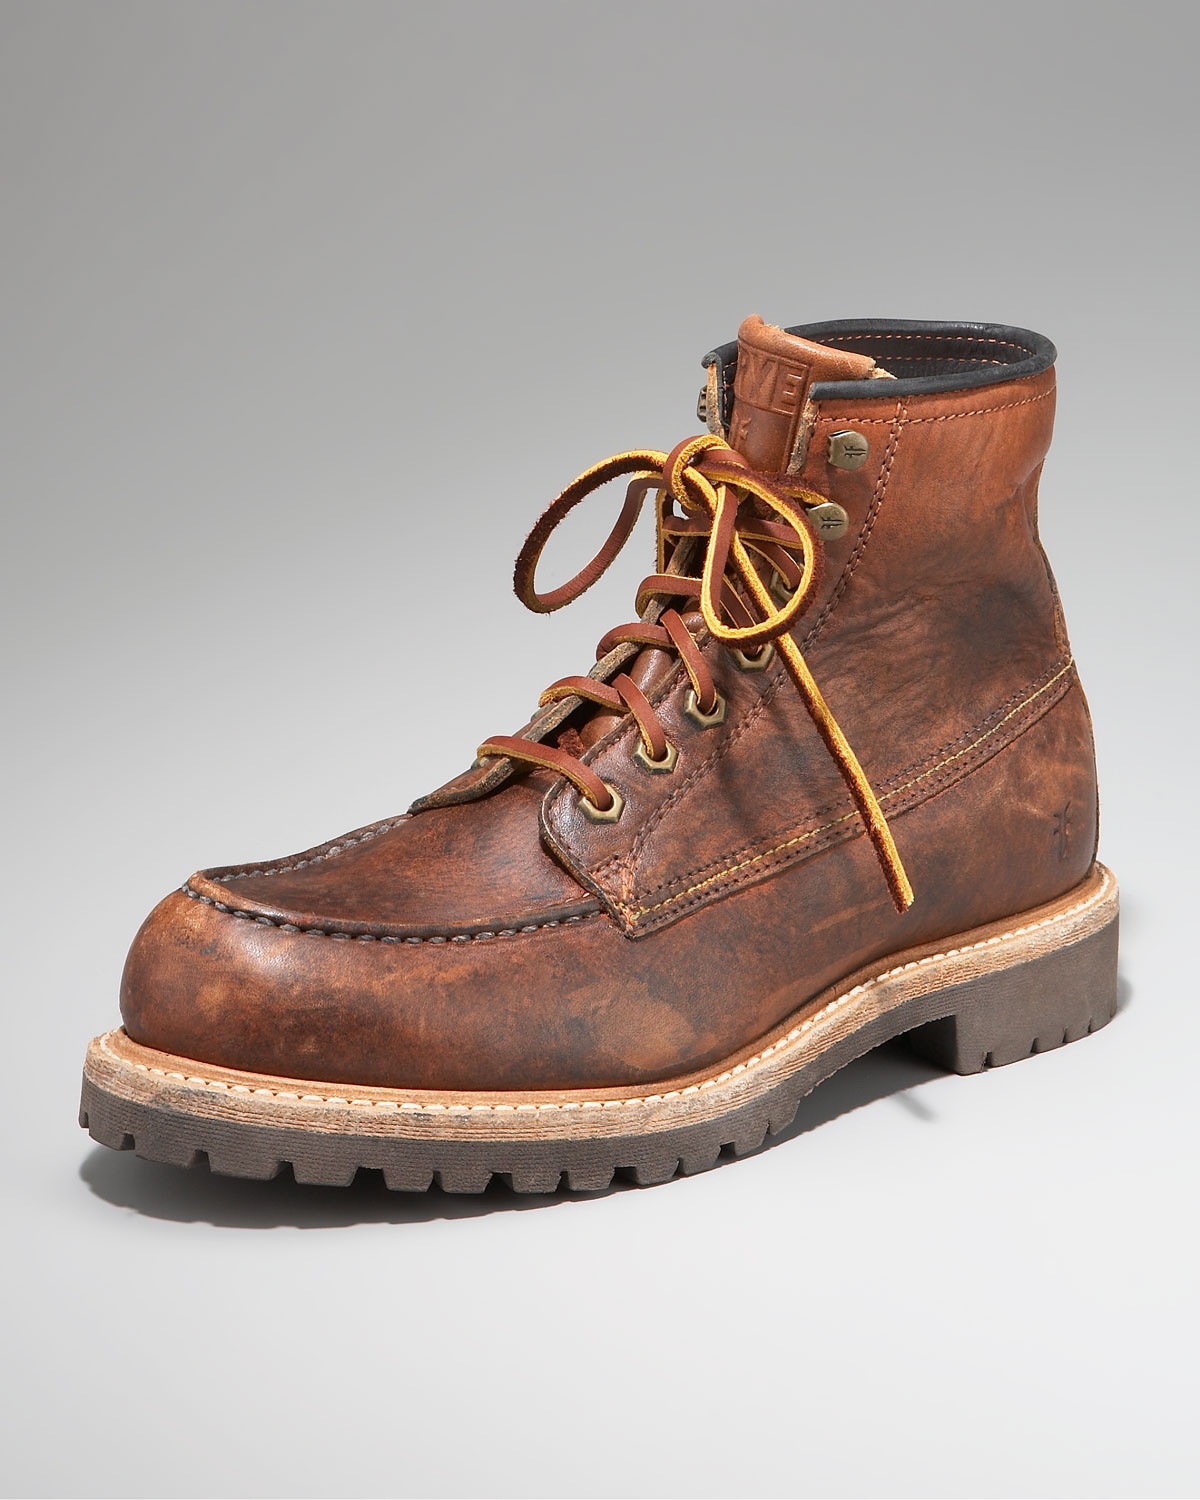 Lyst - Frye Dakota Stone-wash Boot in Brown for Men